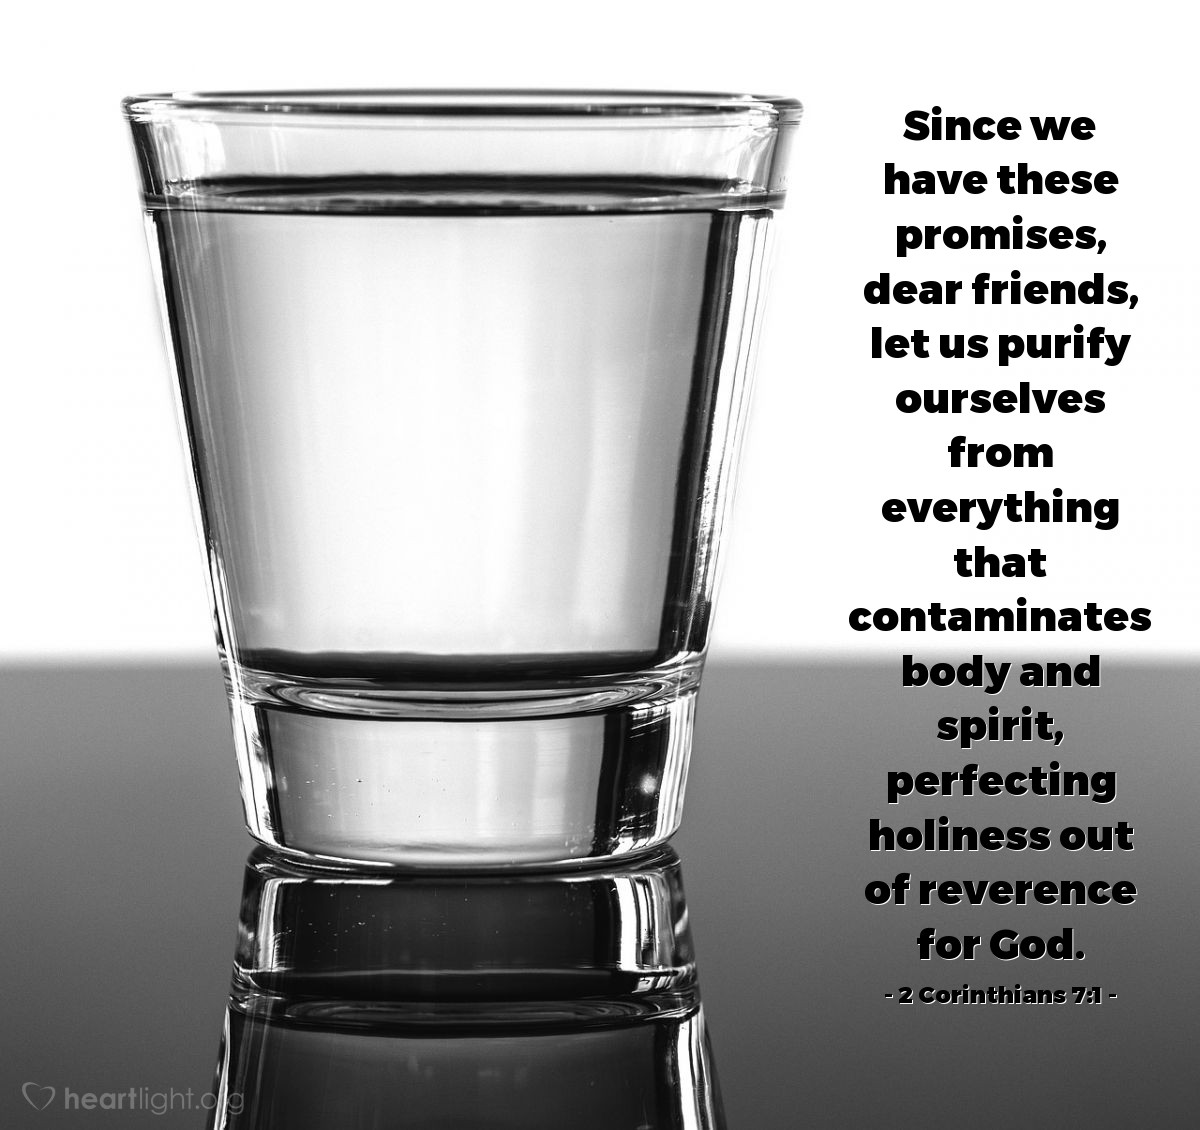 Illustration of 2 Corinthians 7:1 on Holiness